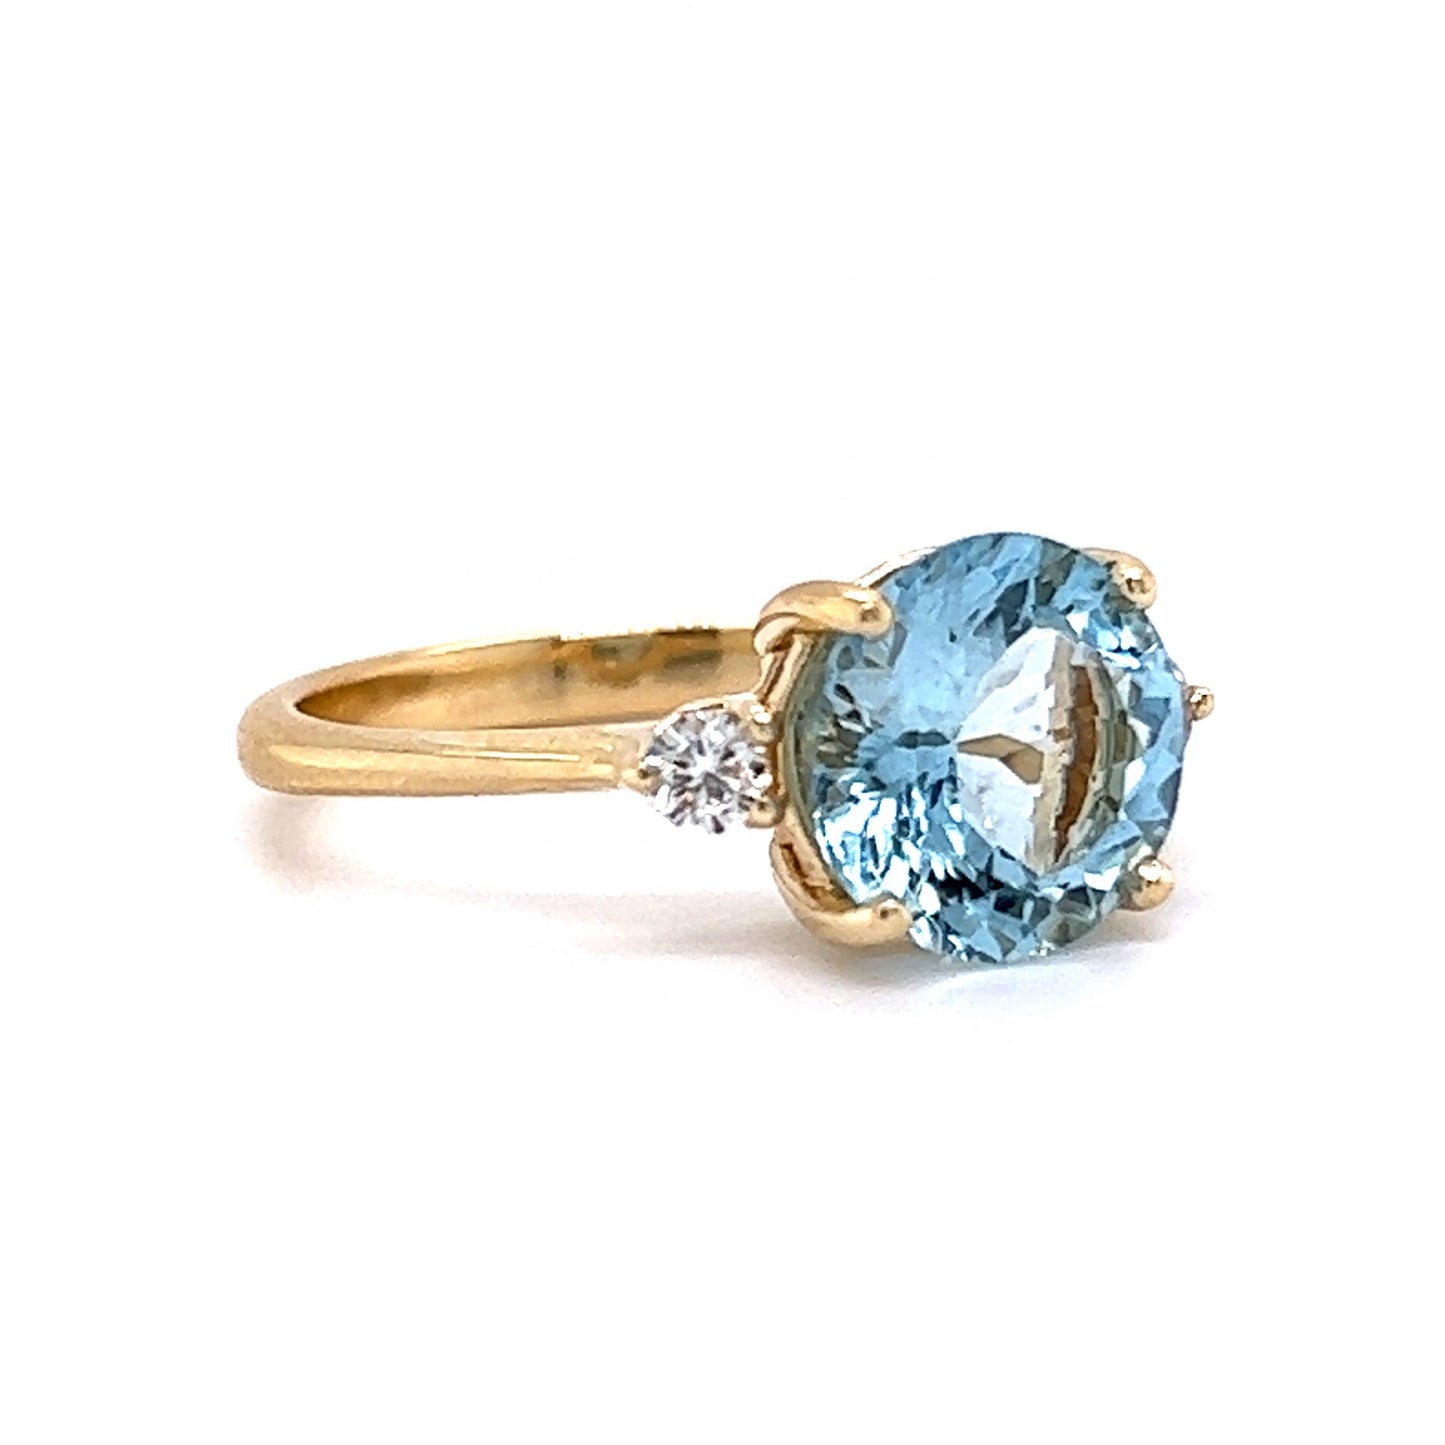 2.21 Aquamarine & Diamond Engagement Ring in 14k Gold